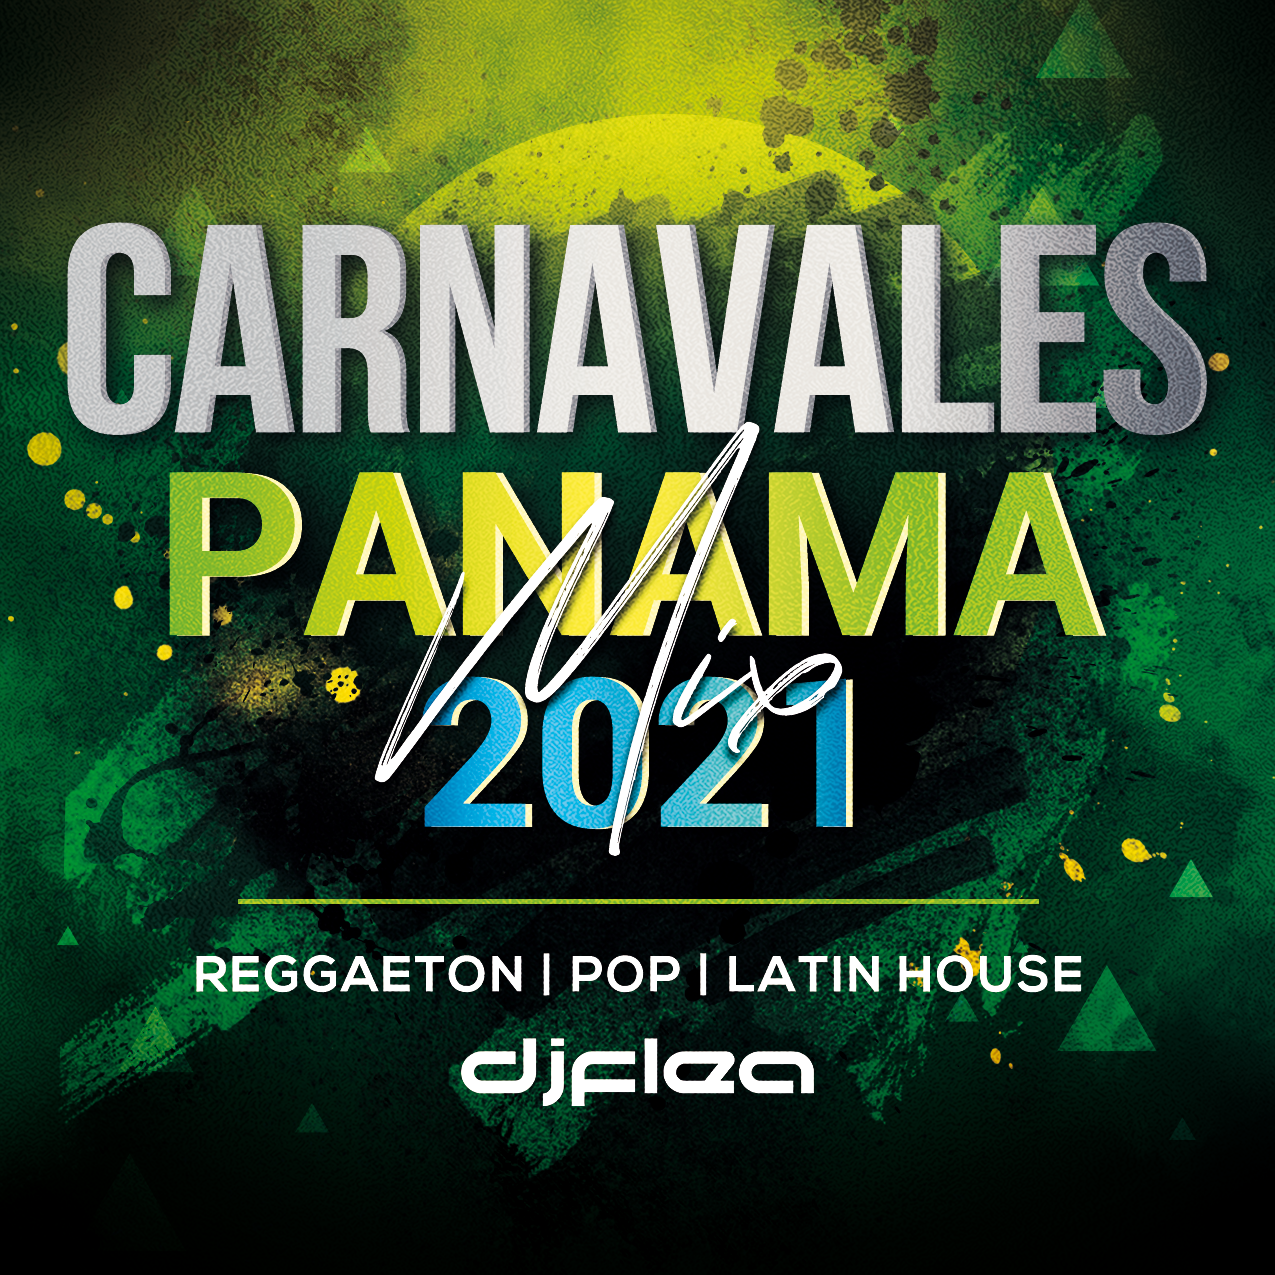 Carnavales Panama 2021